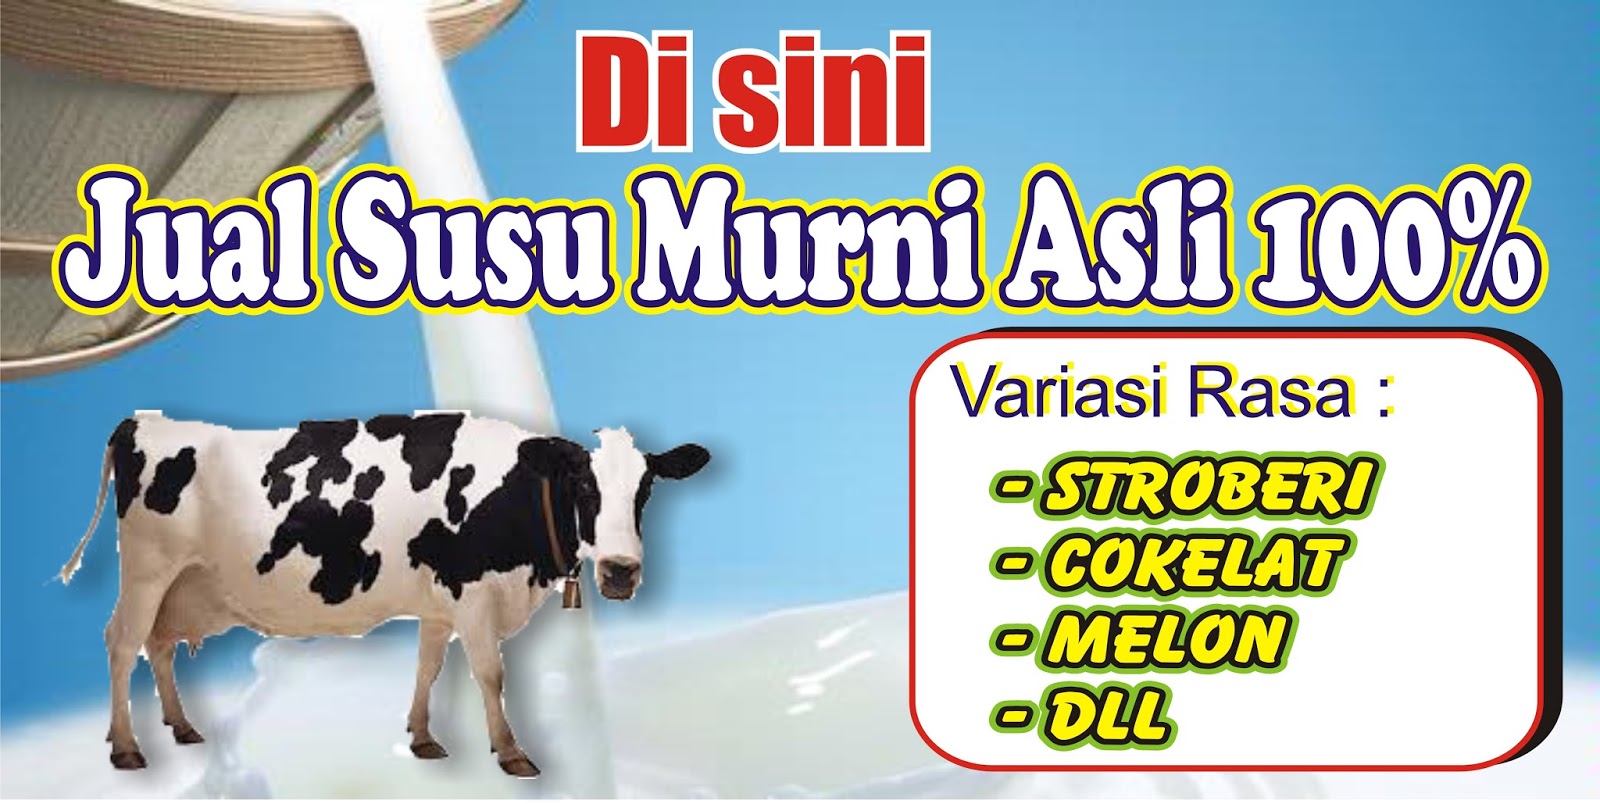 Download Contoh Spanduk Susu Murni cdr ~ KARYAKU